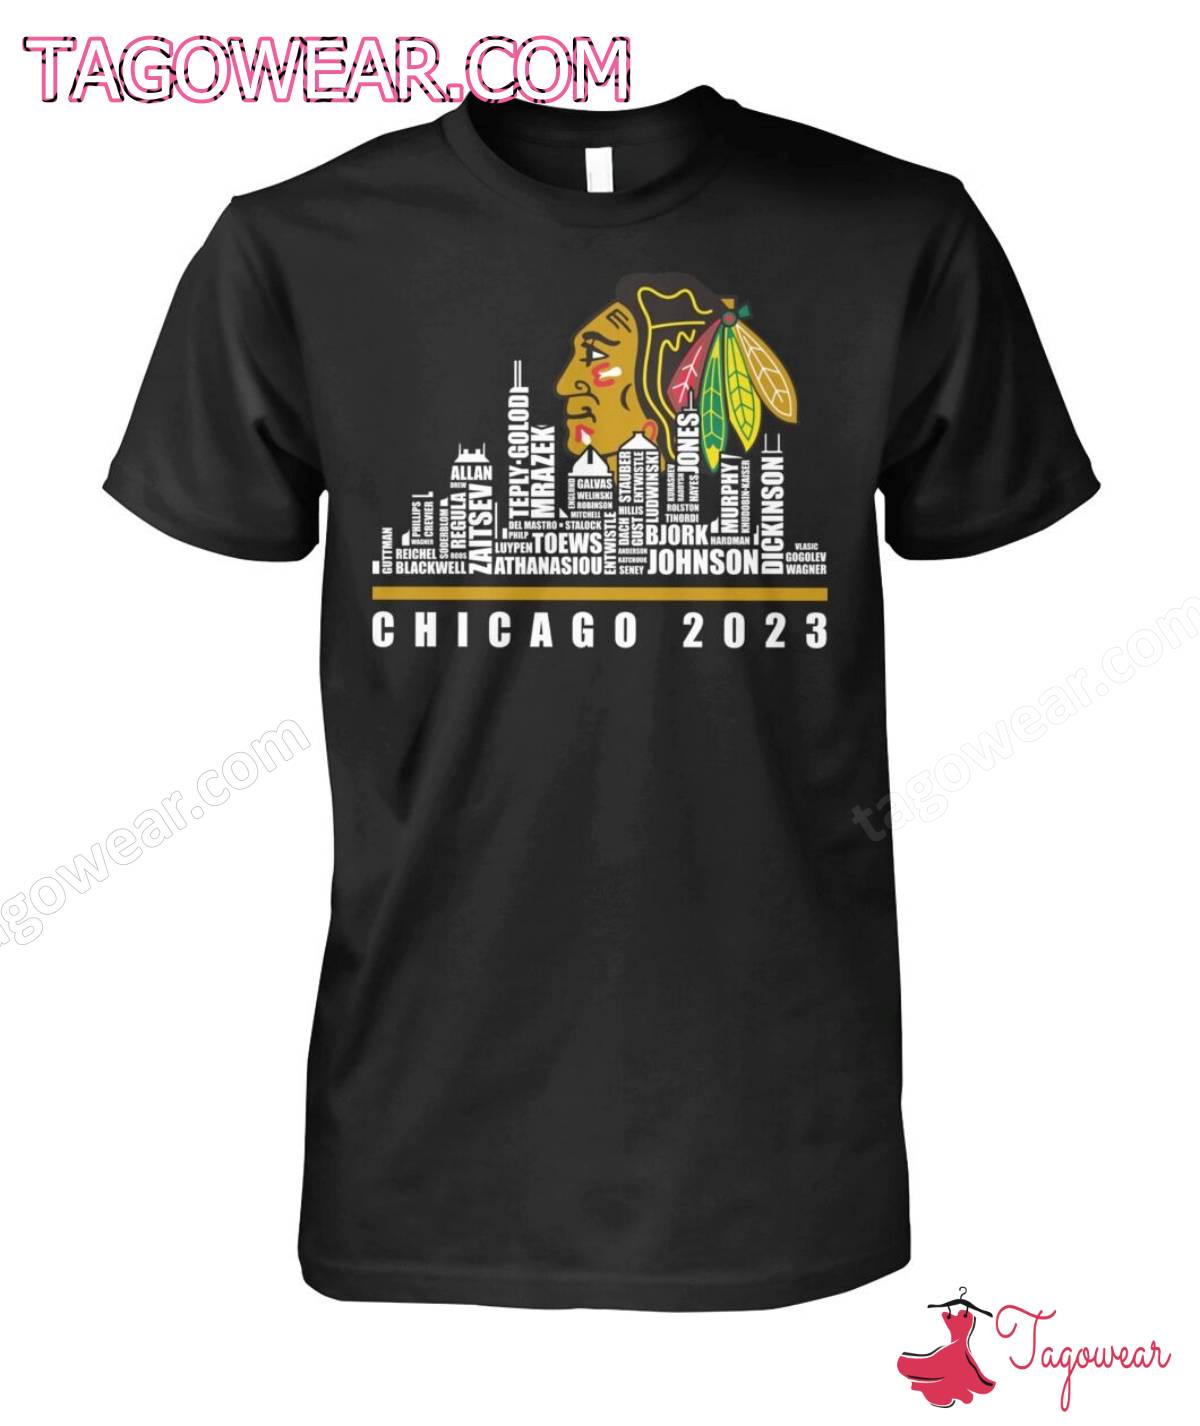 Chicago Blackhawks Players Chicago 2023 City Shirt